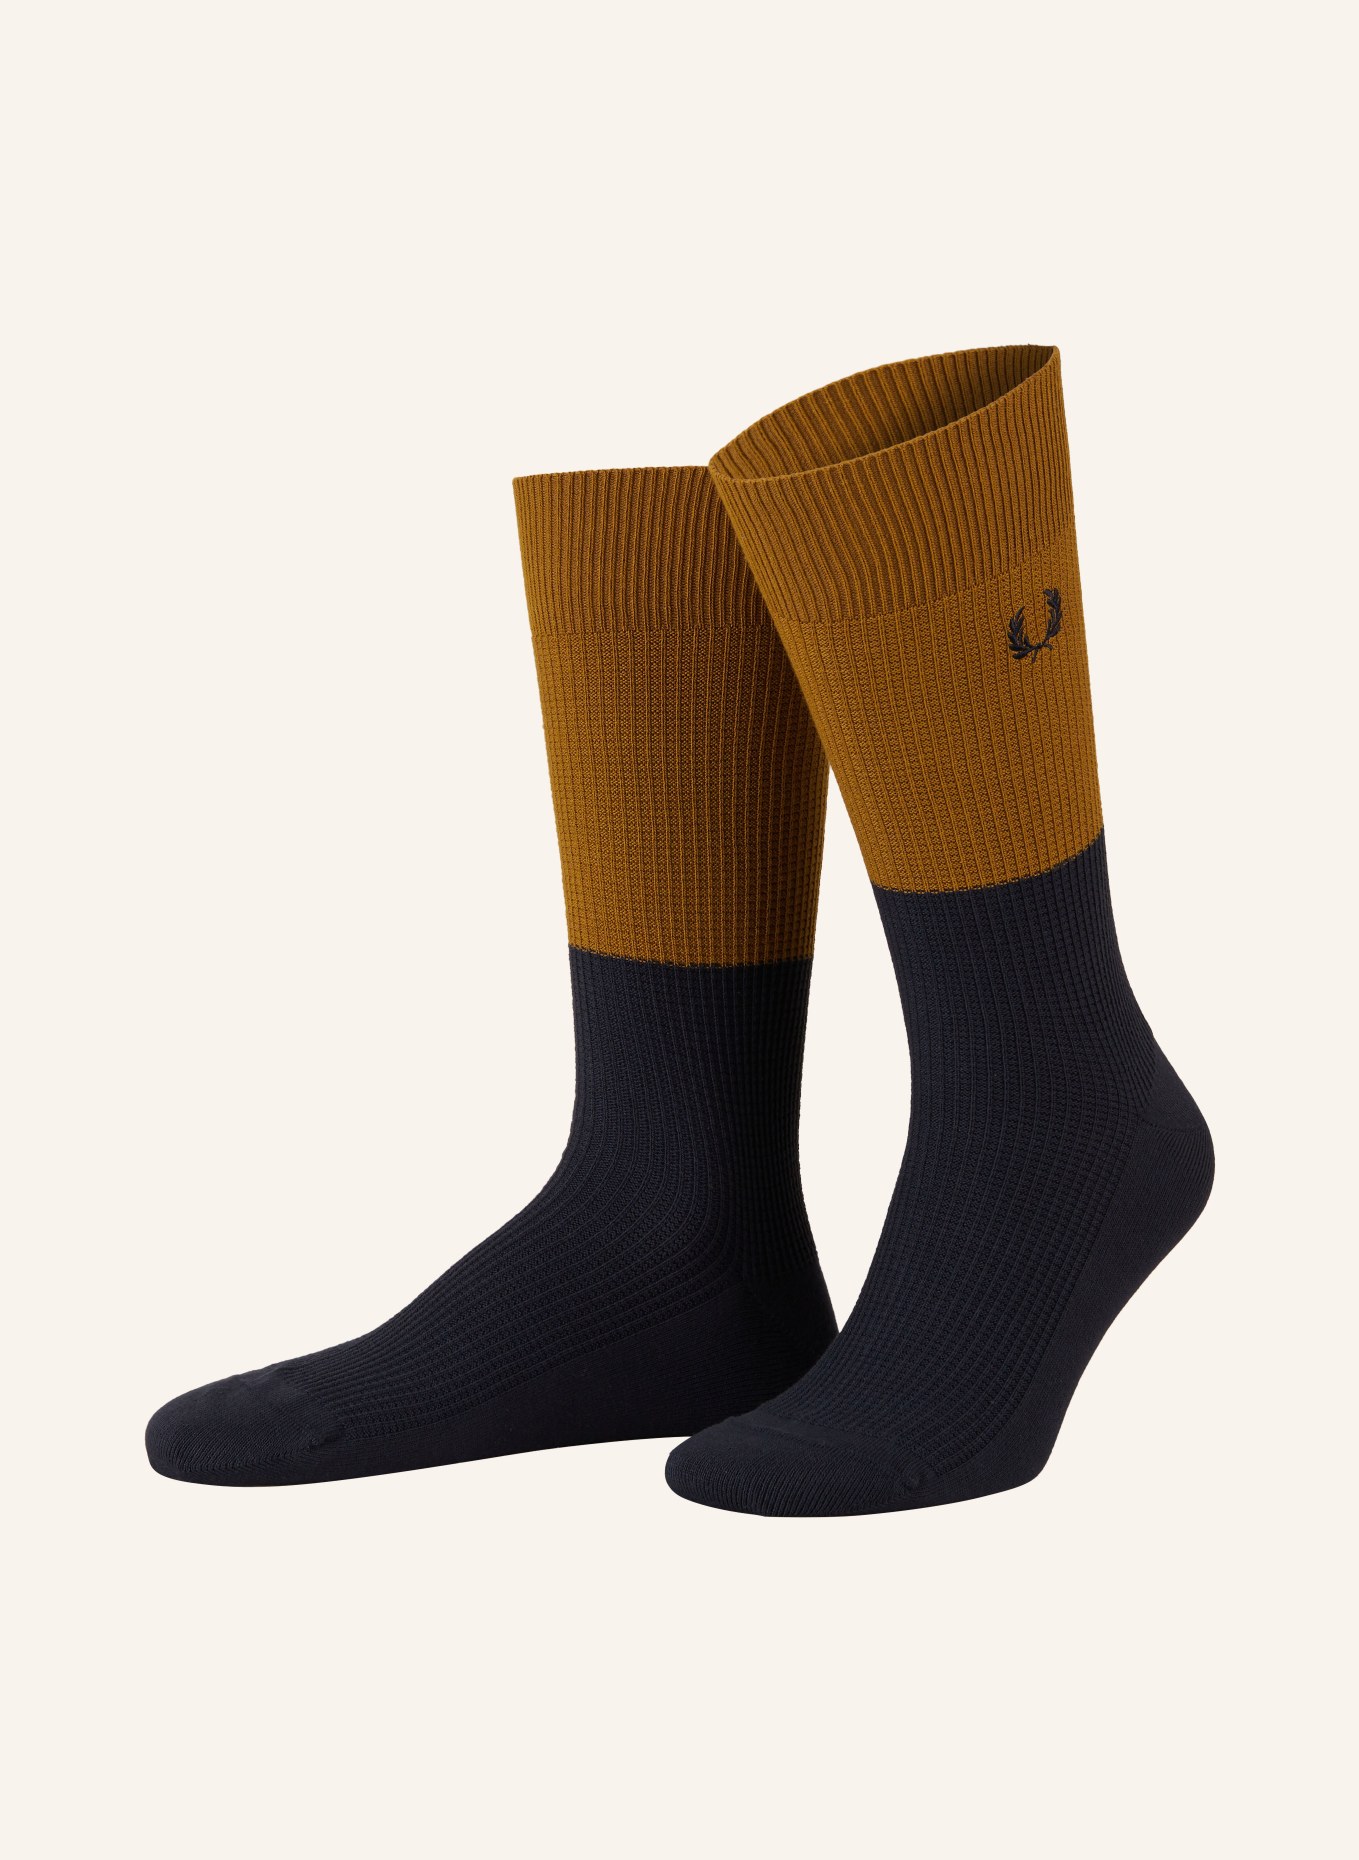 FRED PERRY Socken, Farbe: T86 DRK CARML/NVY (Bild 1)